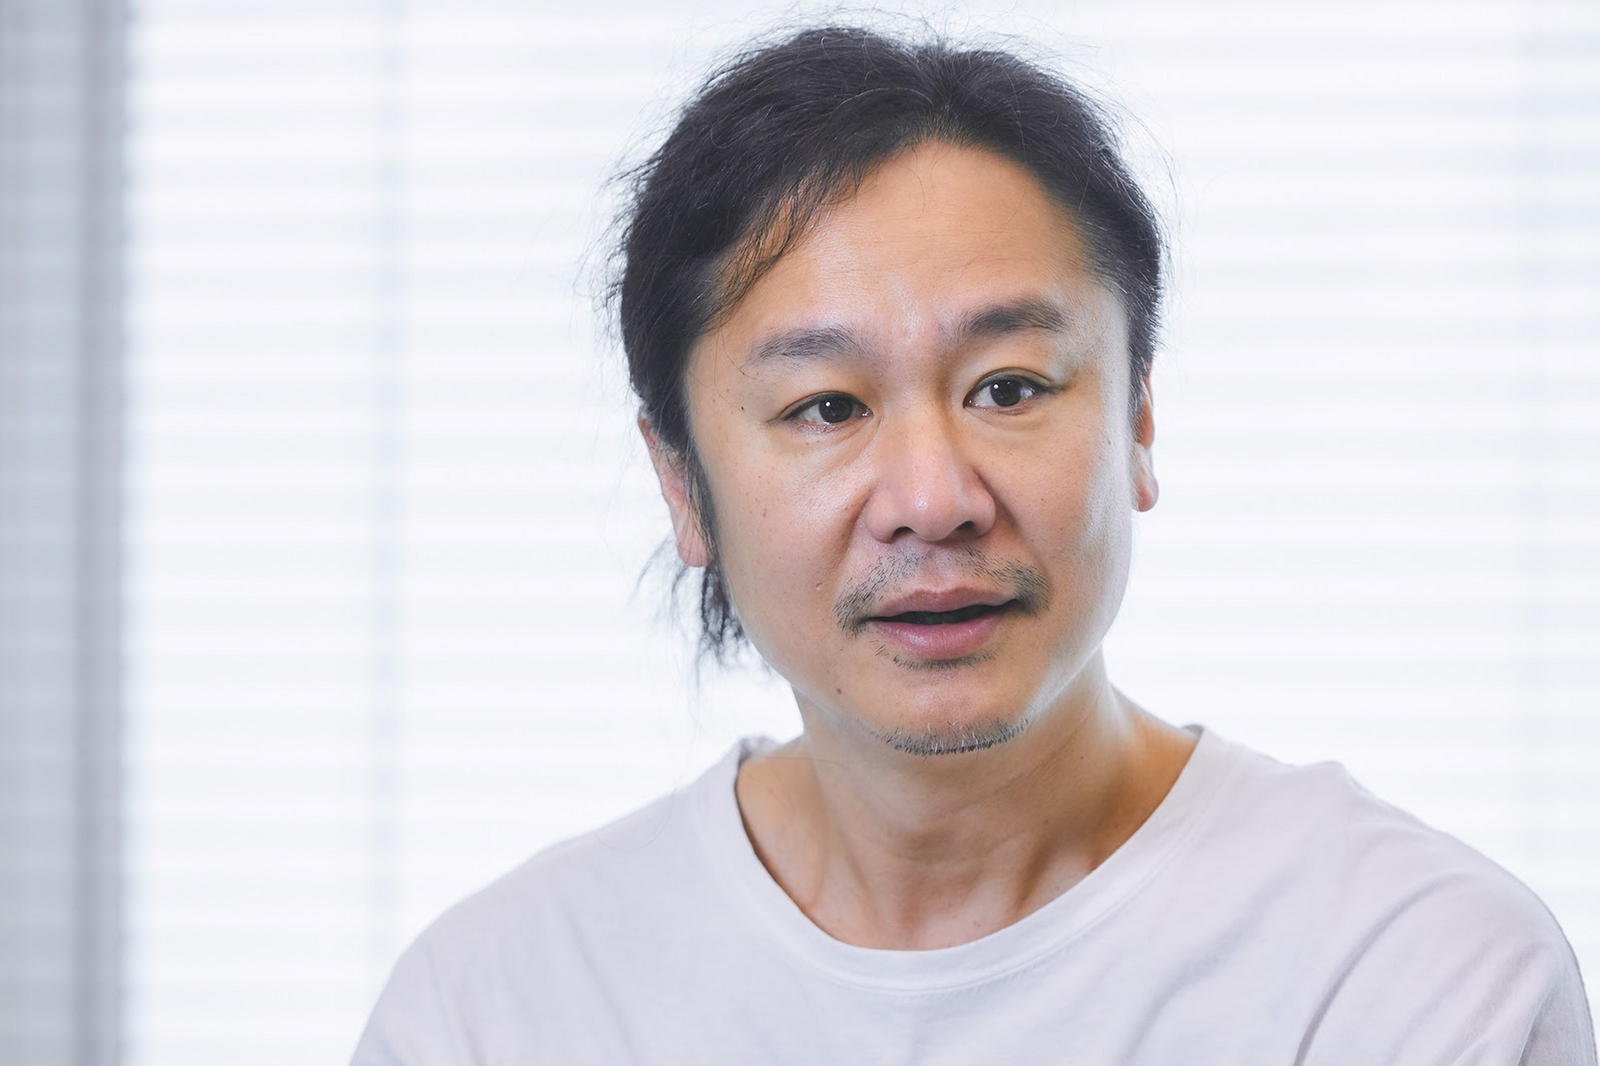 Takamasa Shiba, ”Dragon Quest Walk” Producer, Square Enix